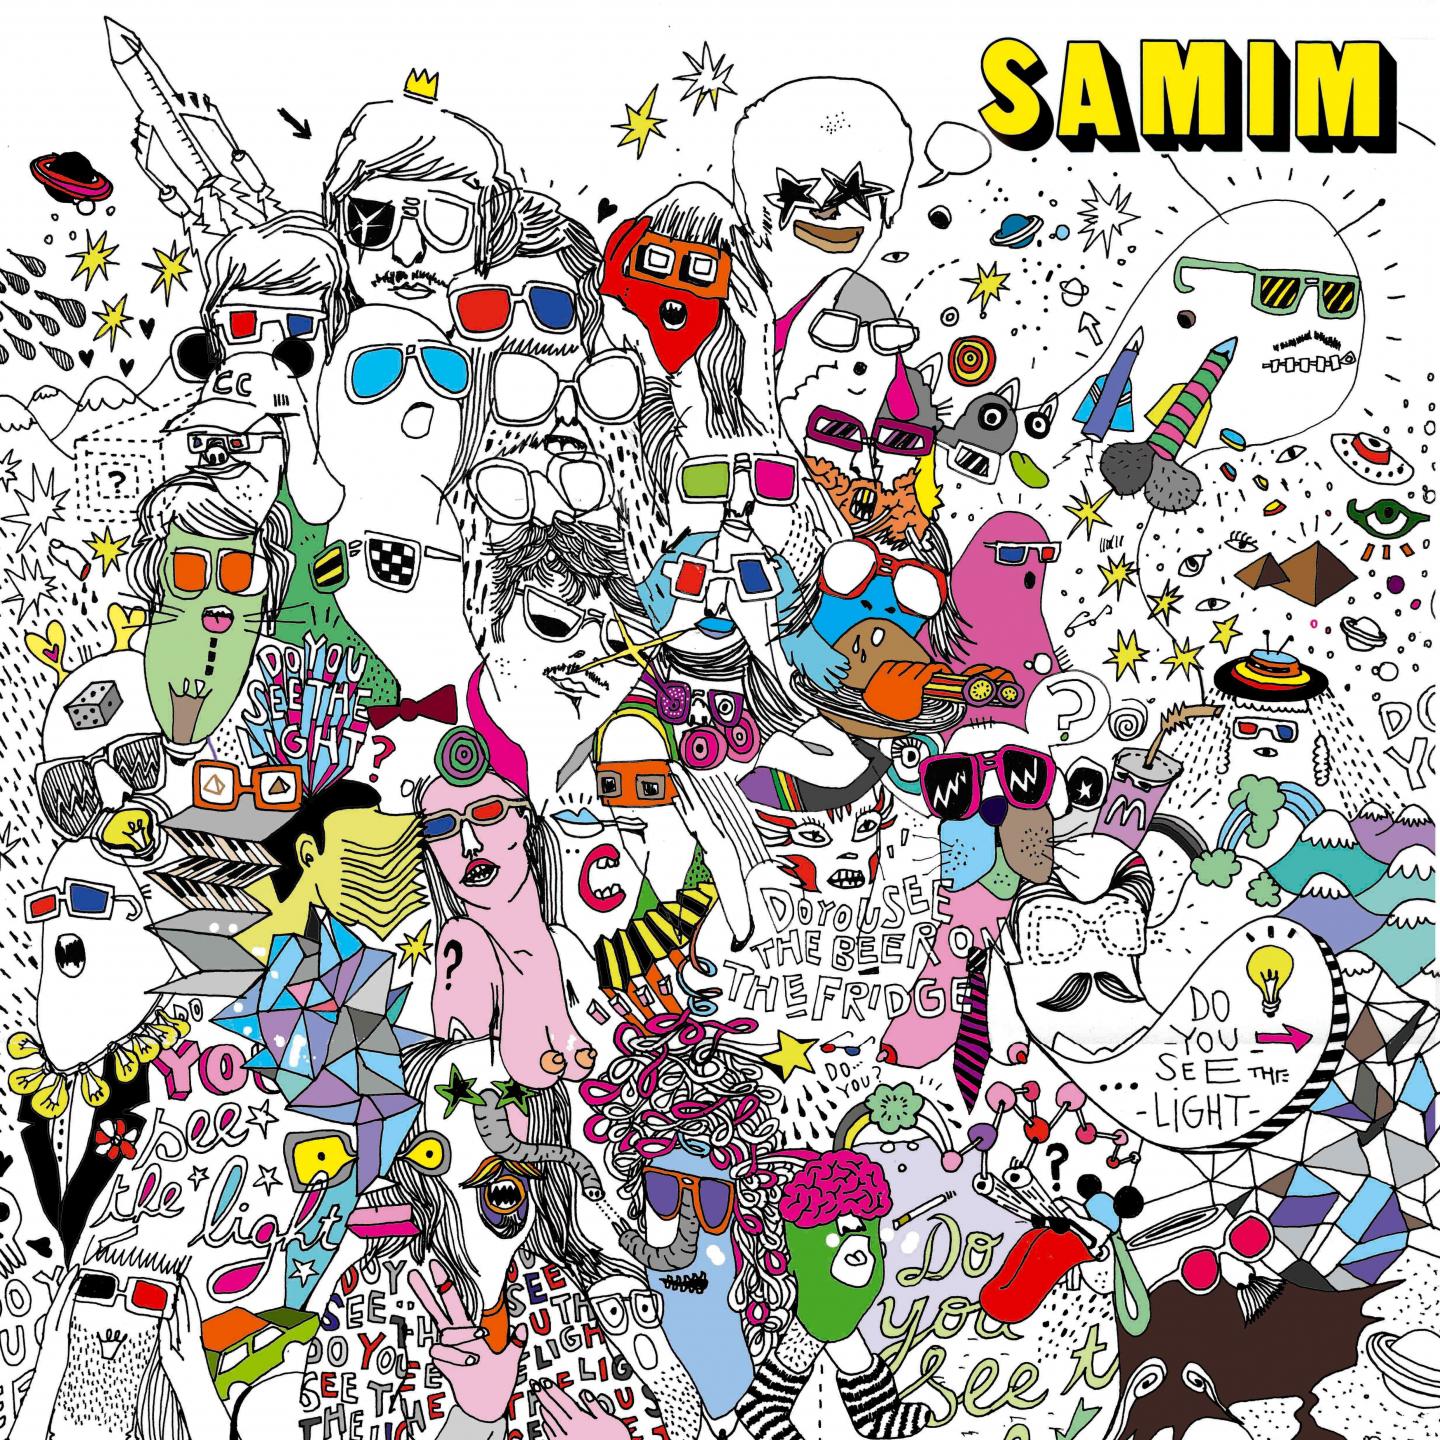 Samim - Hardma (unfinished sympathy mix)